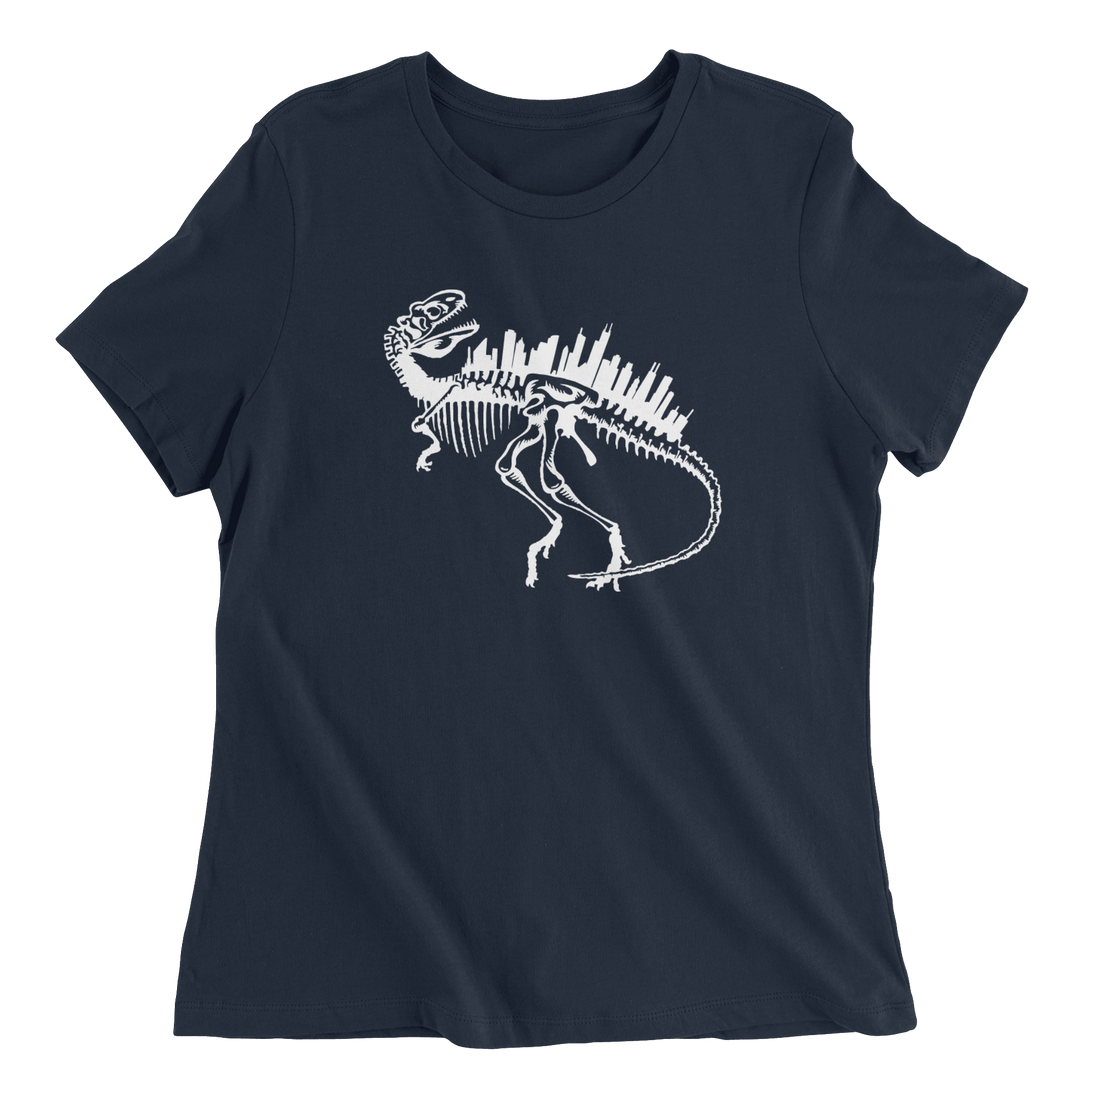 Chicagosarus Rex - The T-Shirt Deli, Co.